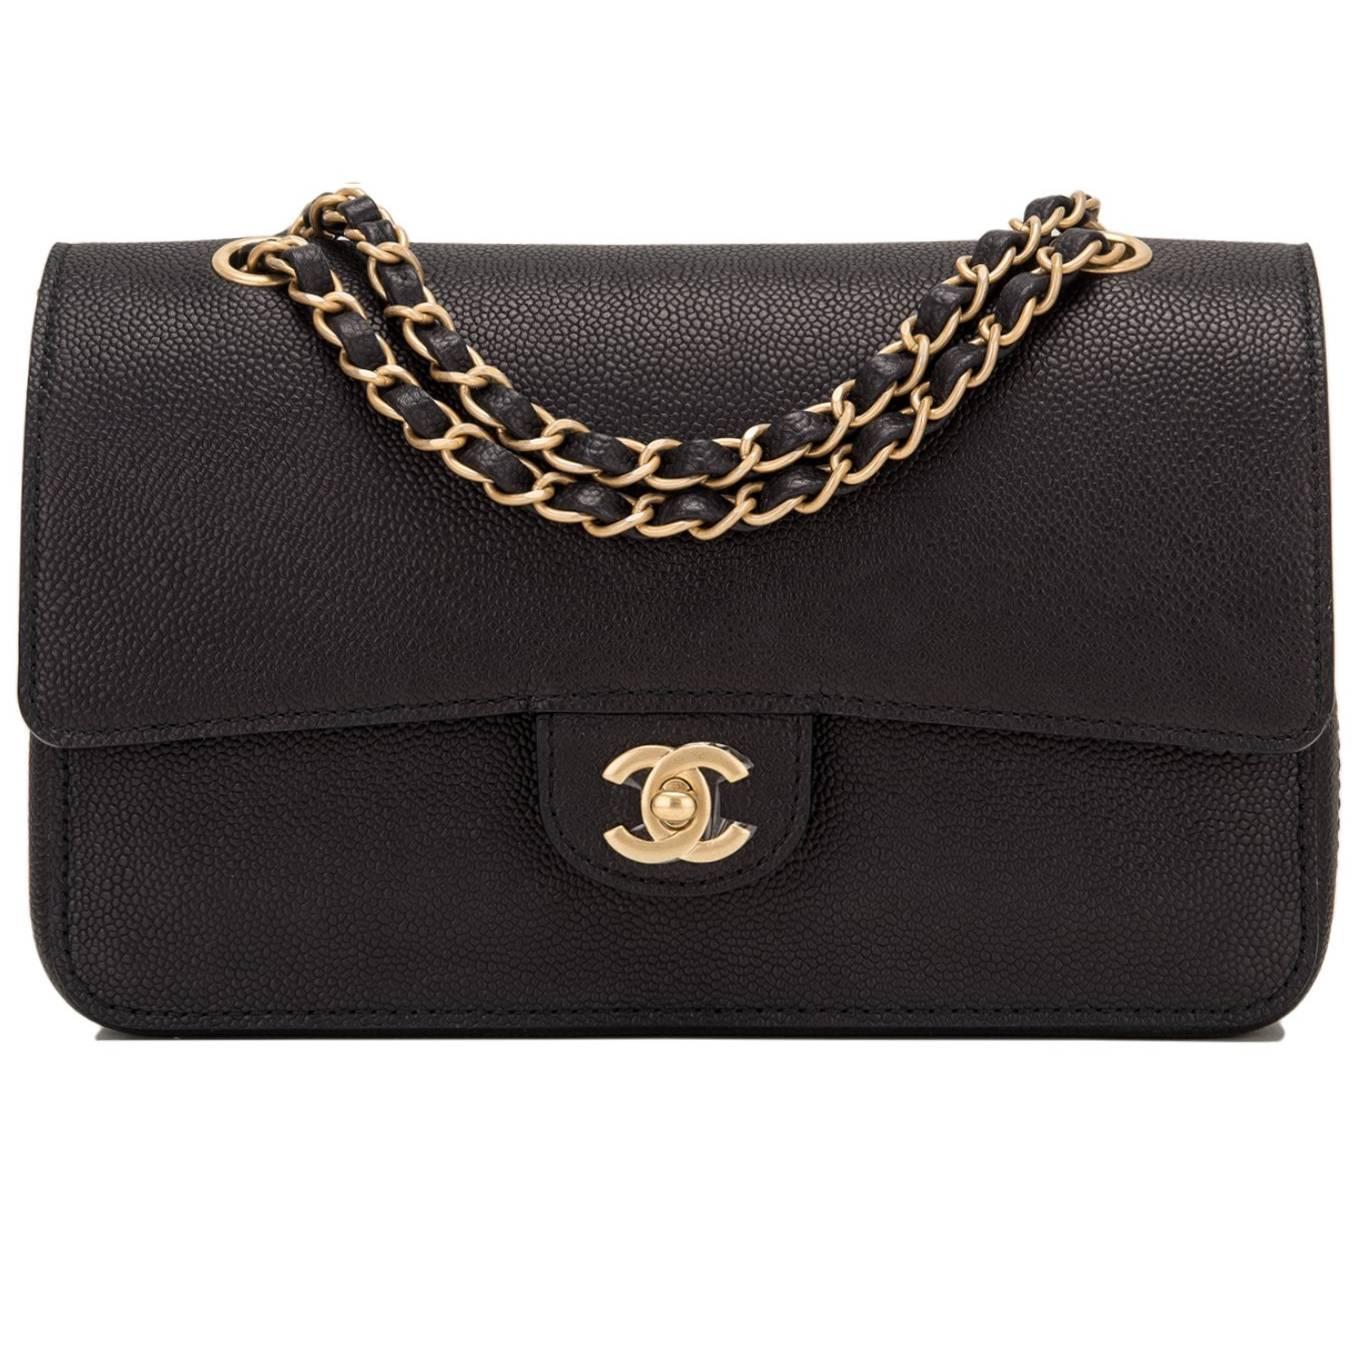 Chanel Black Caviar Medium Classic Double Flap Bag NEW For Sale